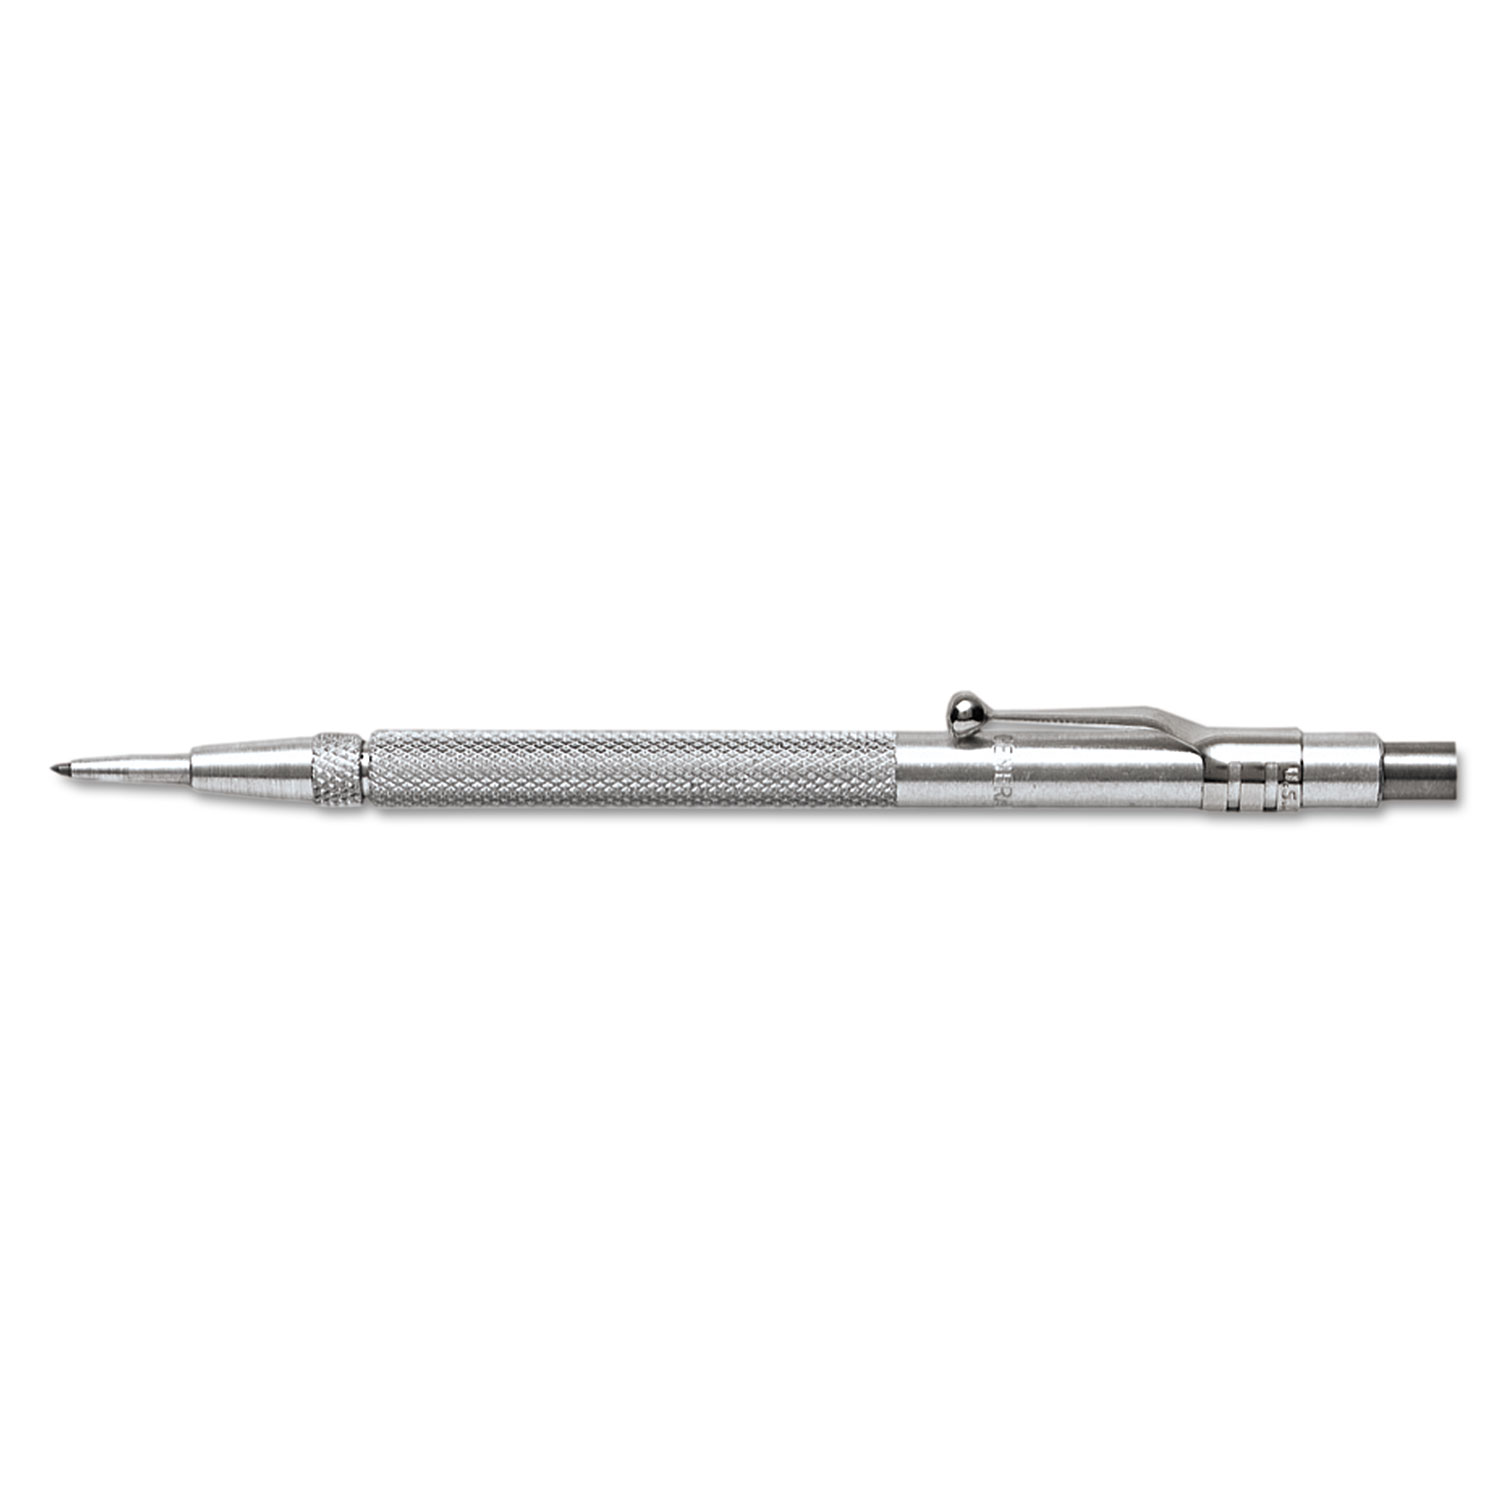 Retrieval-Magnet End Tungsten-Carbide Tip Scriber, Straight, 6, Aluminum